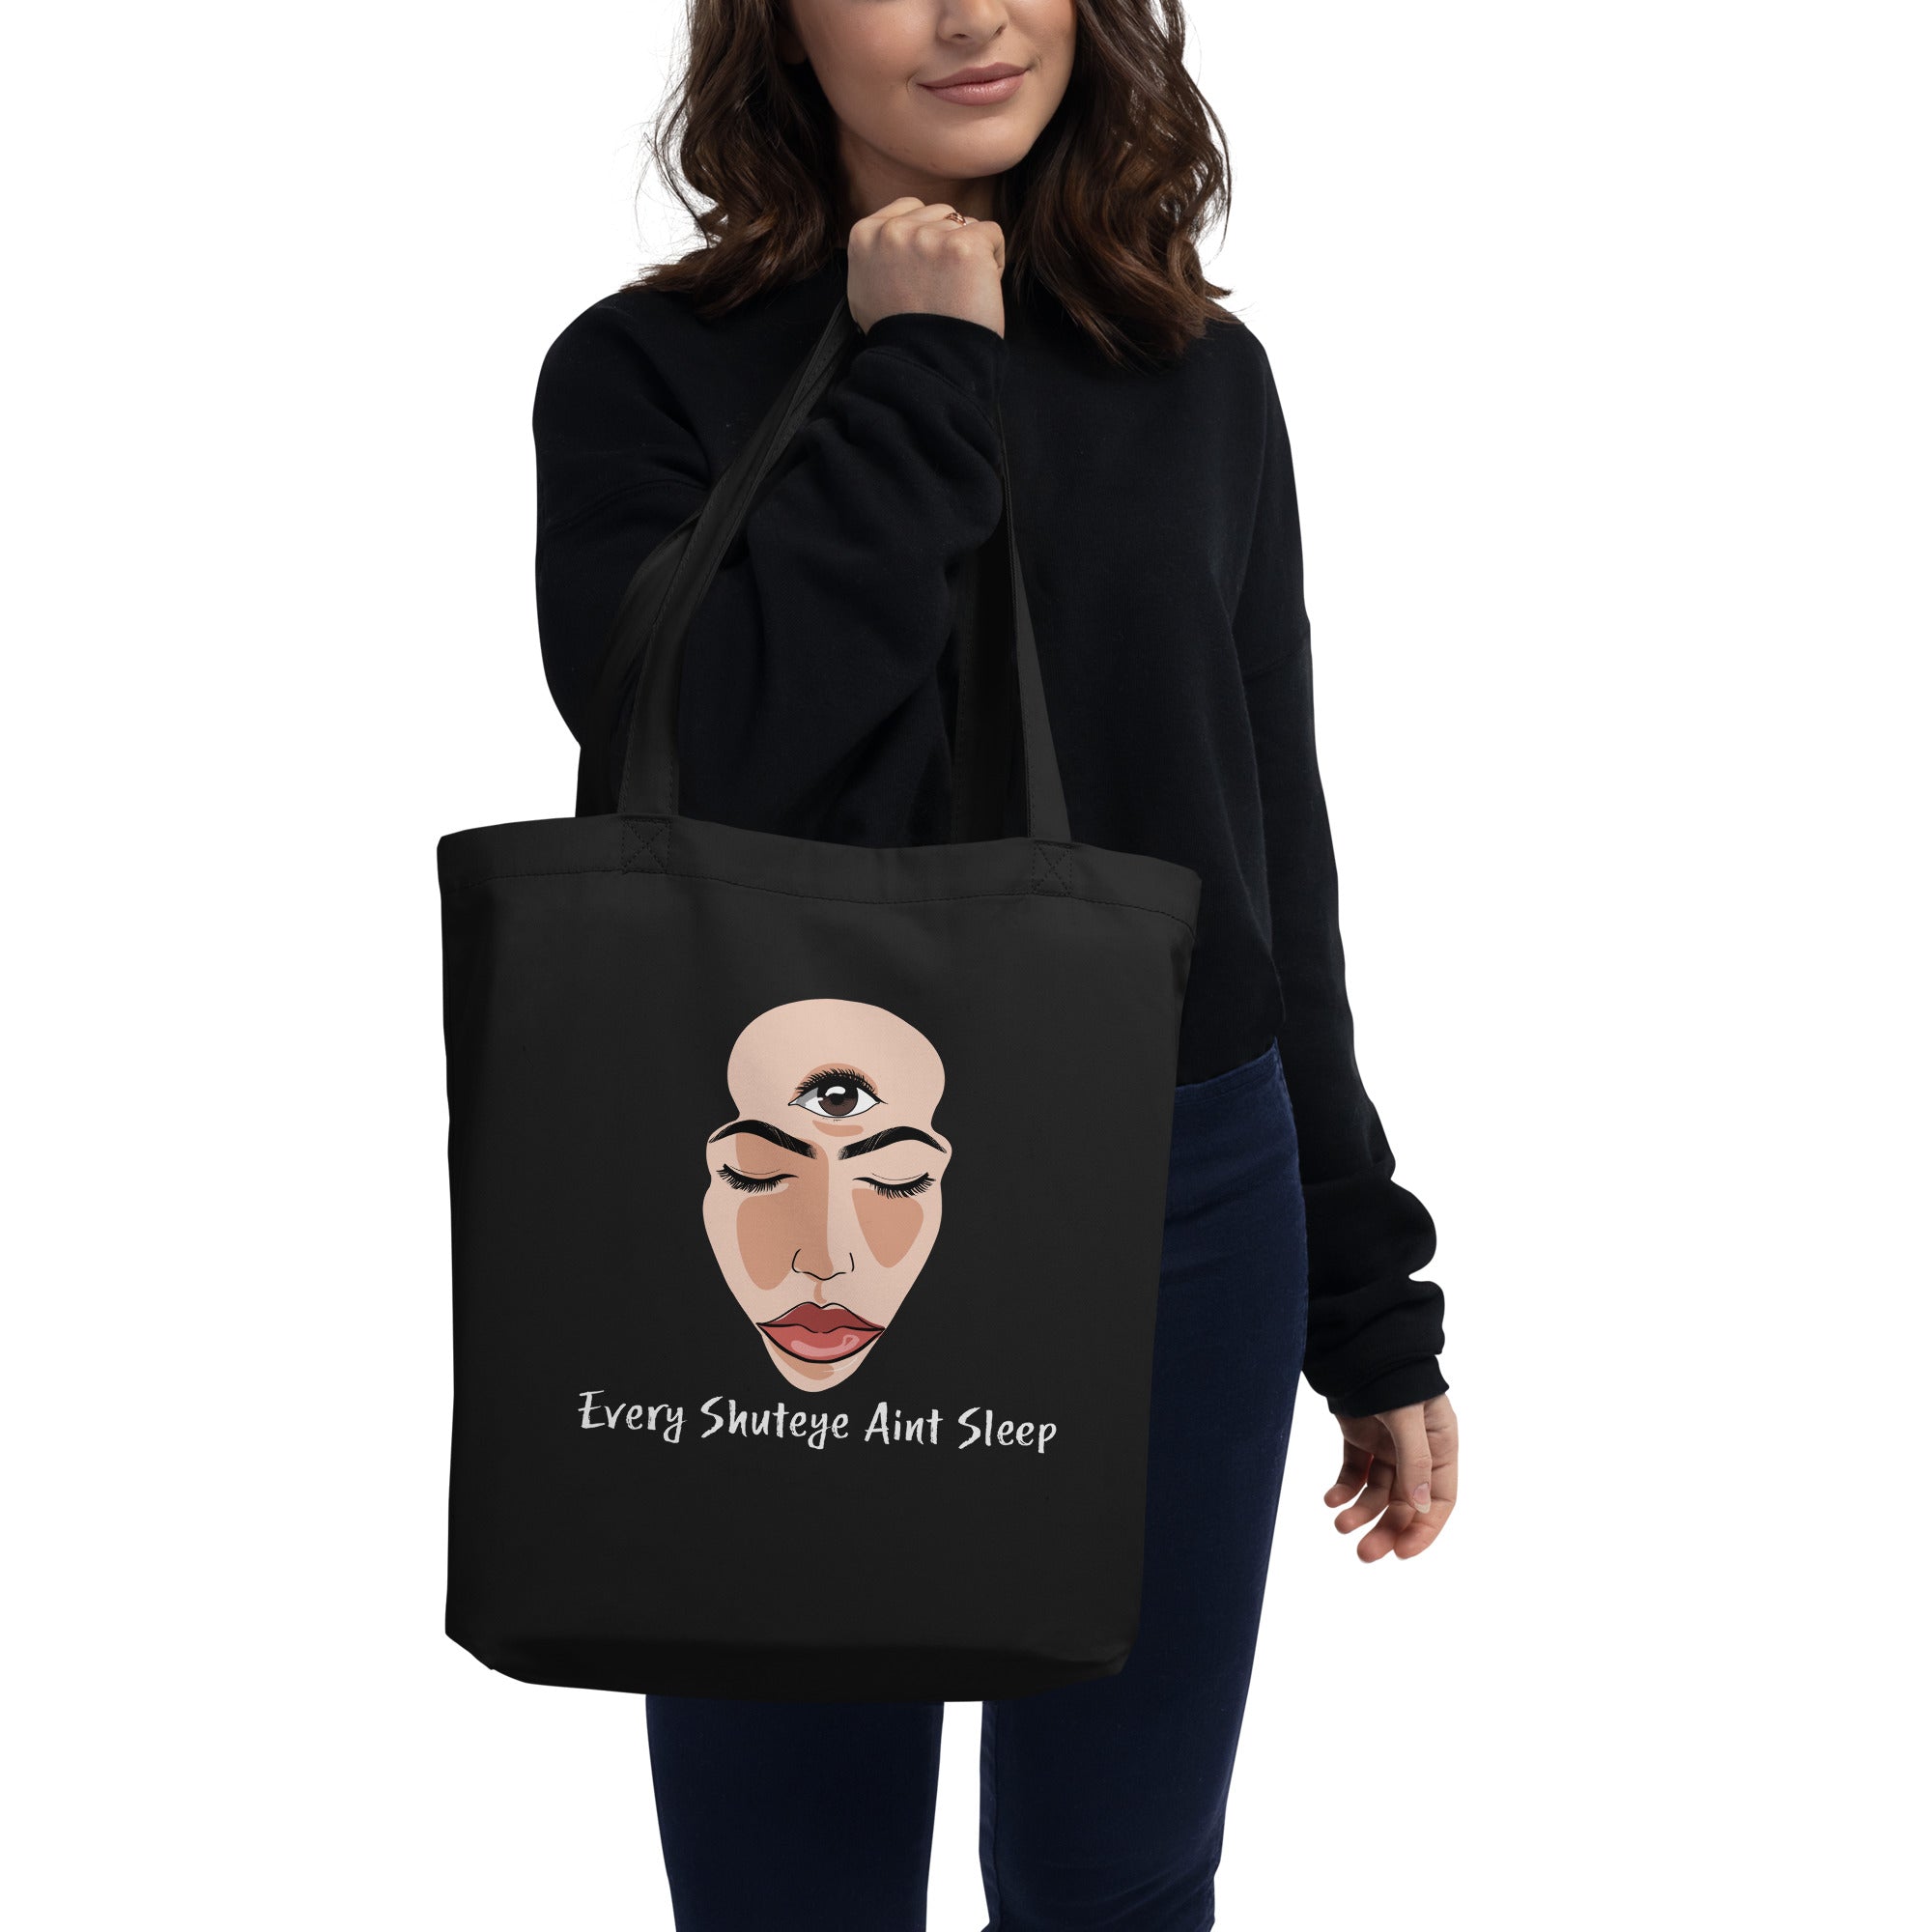 Black Eco Tote Bag - Every Shut Eye Ain't Sleep design